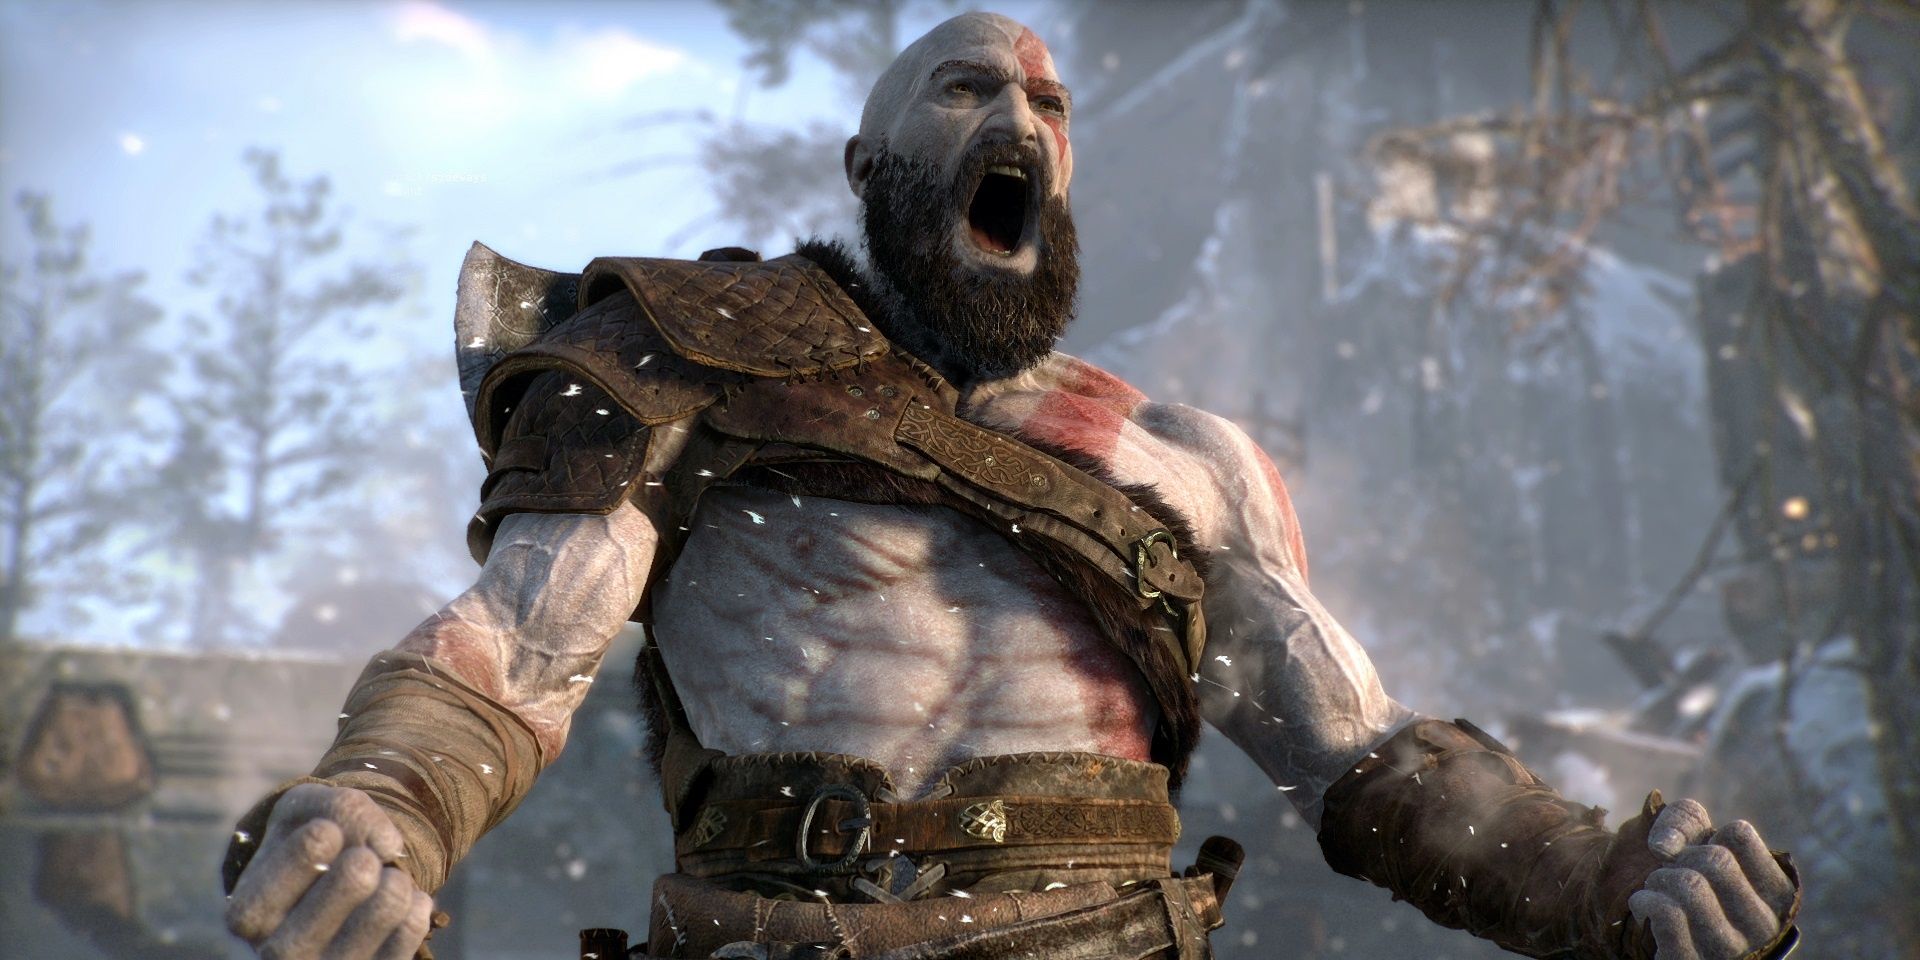 Kratos unleashes his spartan rage